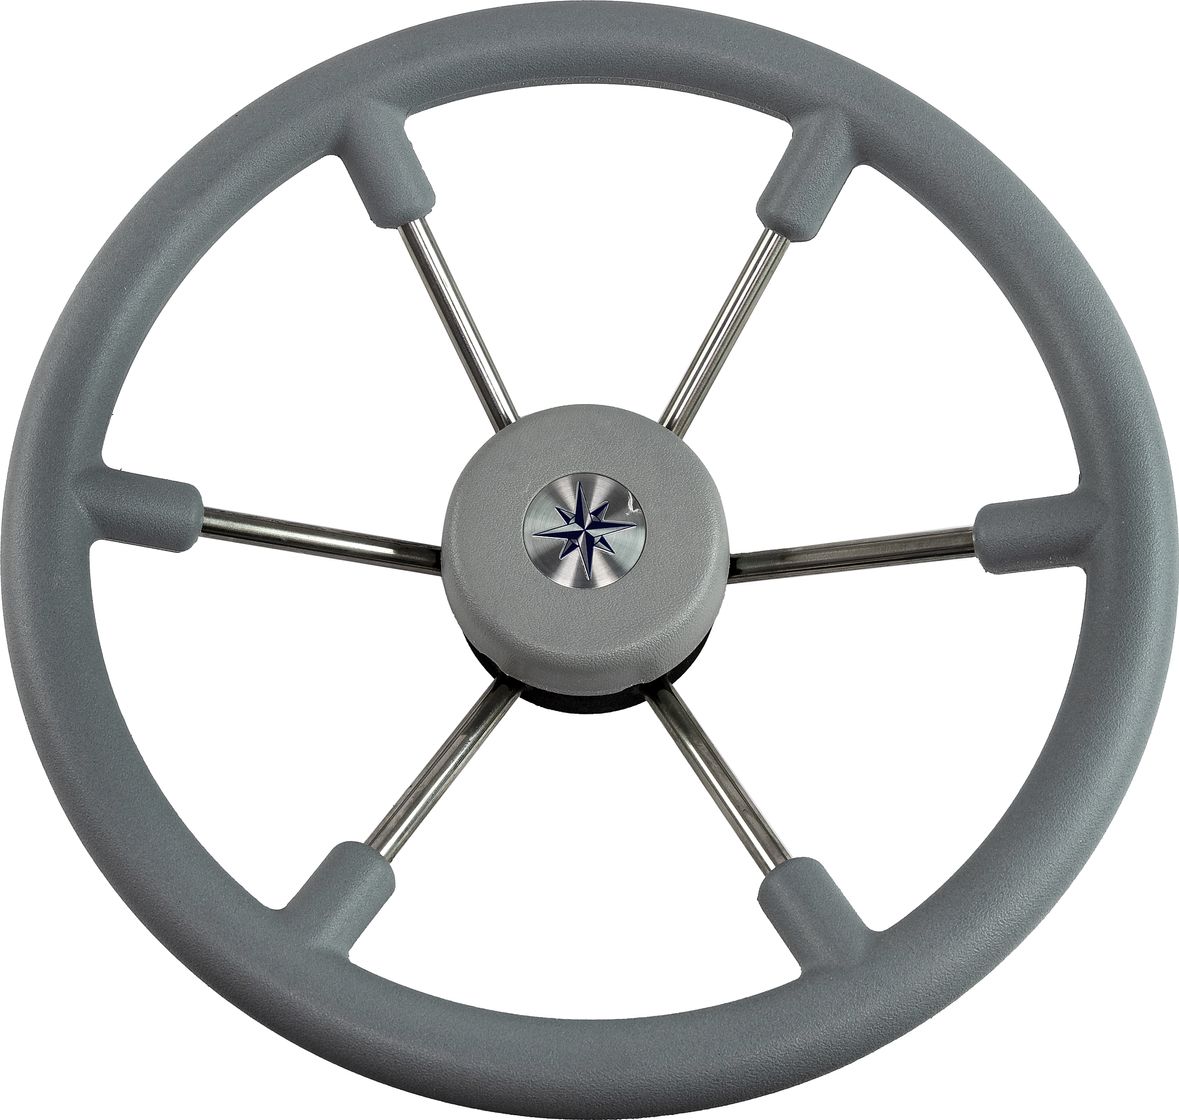 Рулевое колесо LEADER TANEGUM серый обод серебряные спицы д. 360 мм VN7360-03 рулевое колесо delfino обод серый спицы серебряные д 340 мм vn70401 03